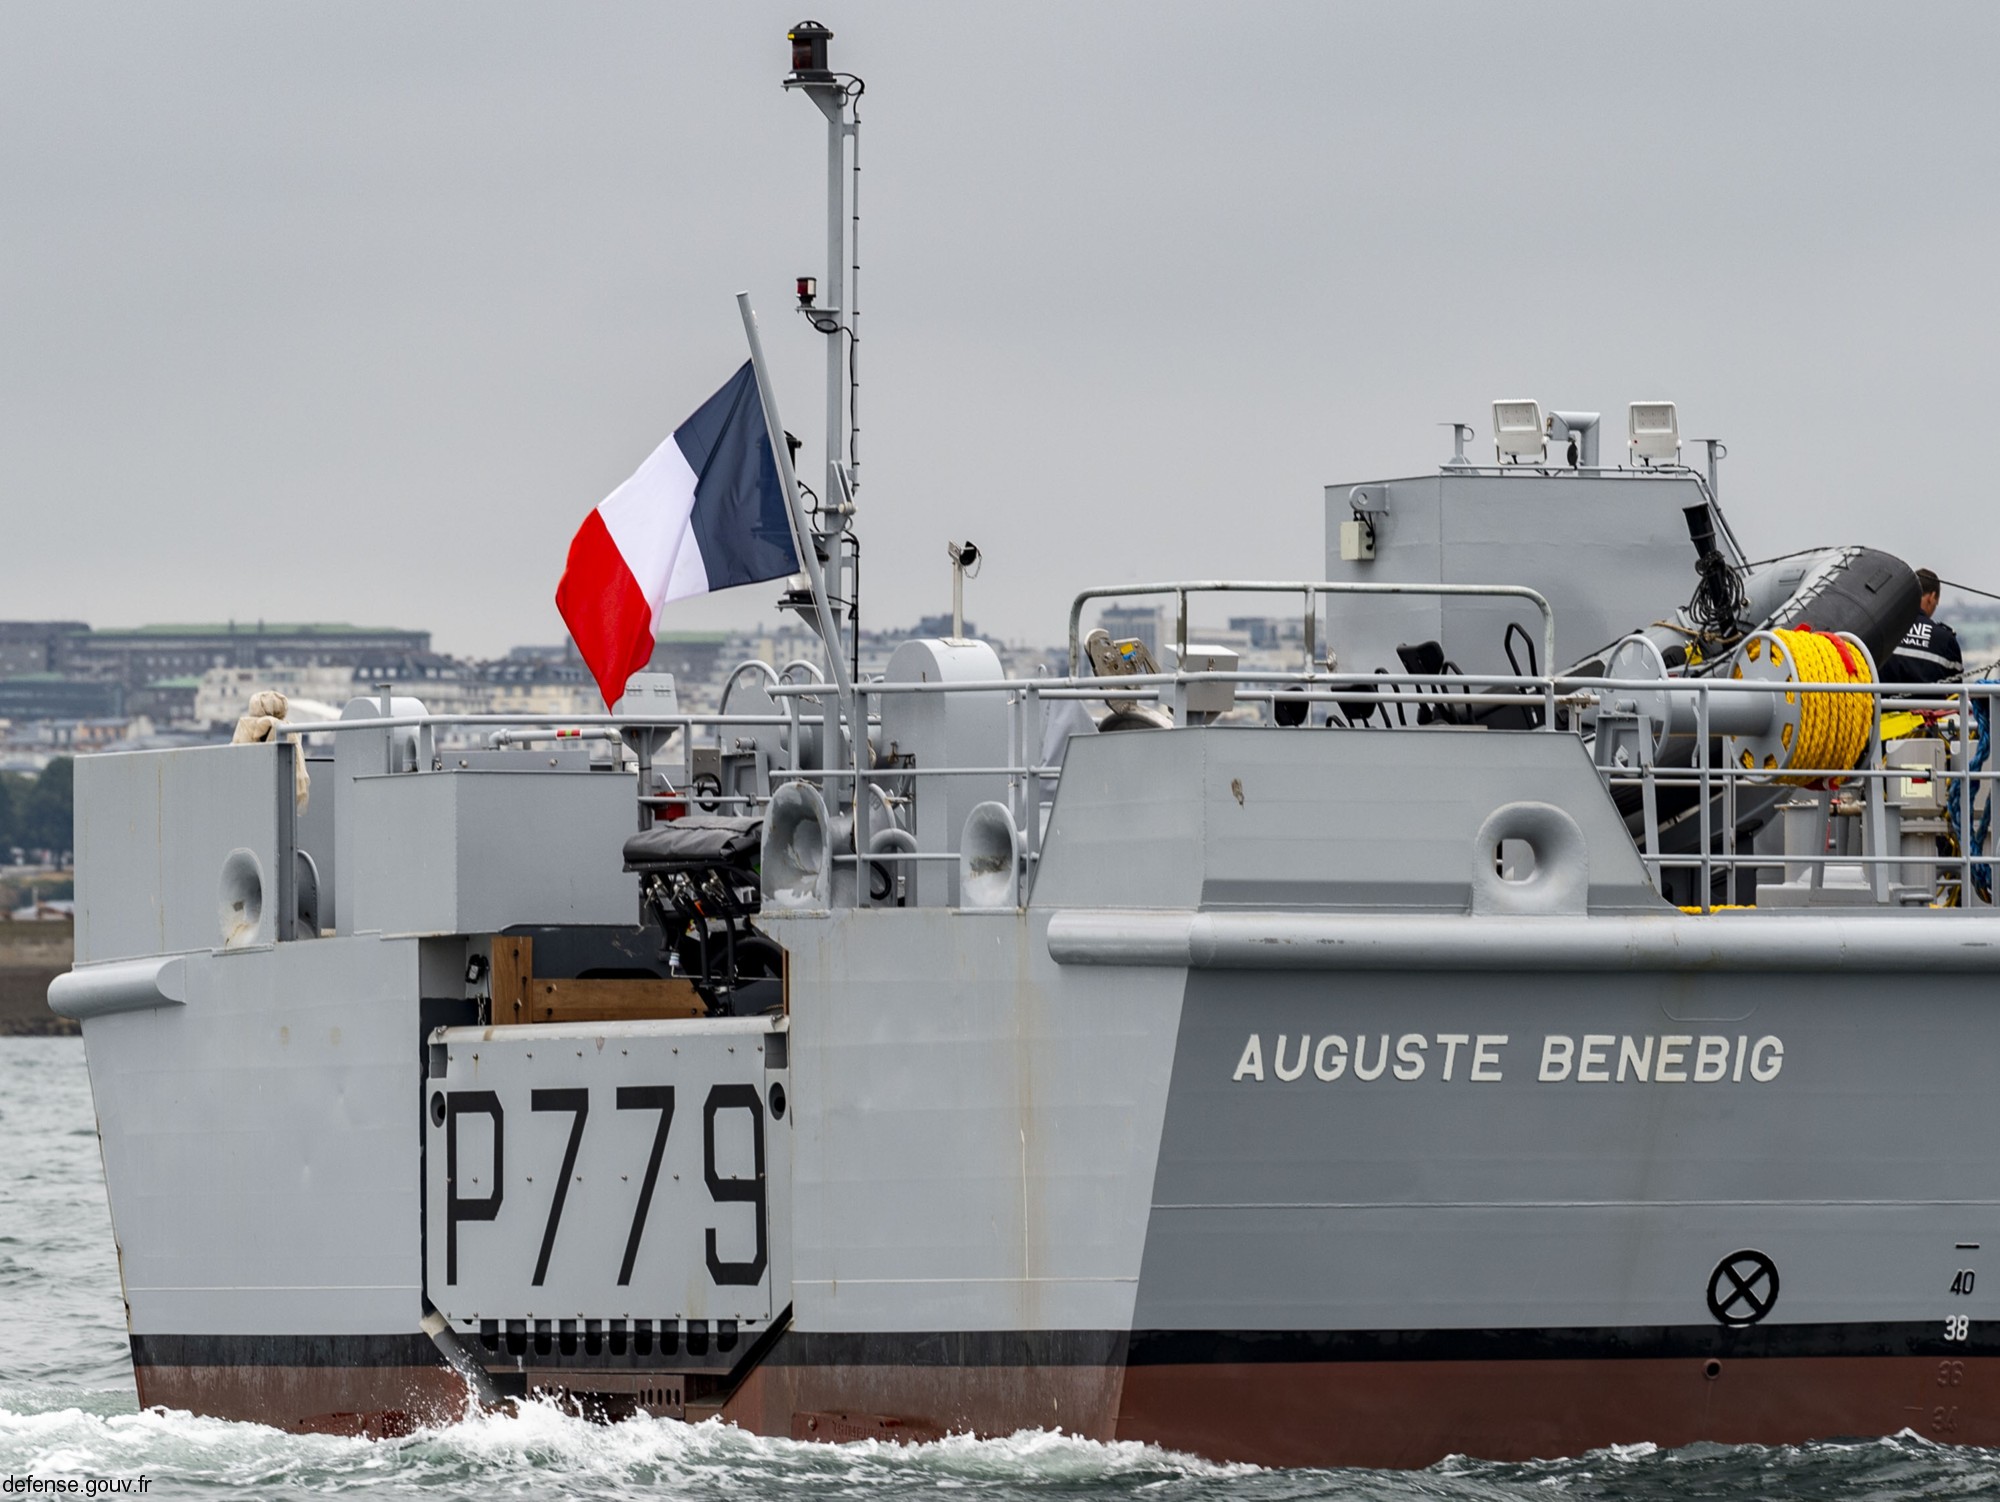 p-779 fs auguste benebig patrouilleur outre-mer pom offshore patrol vessel opv french navy marine nationale noumea 12